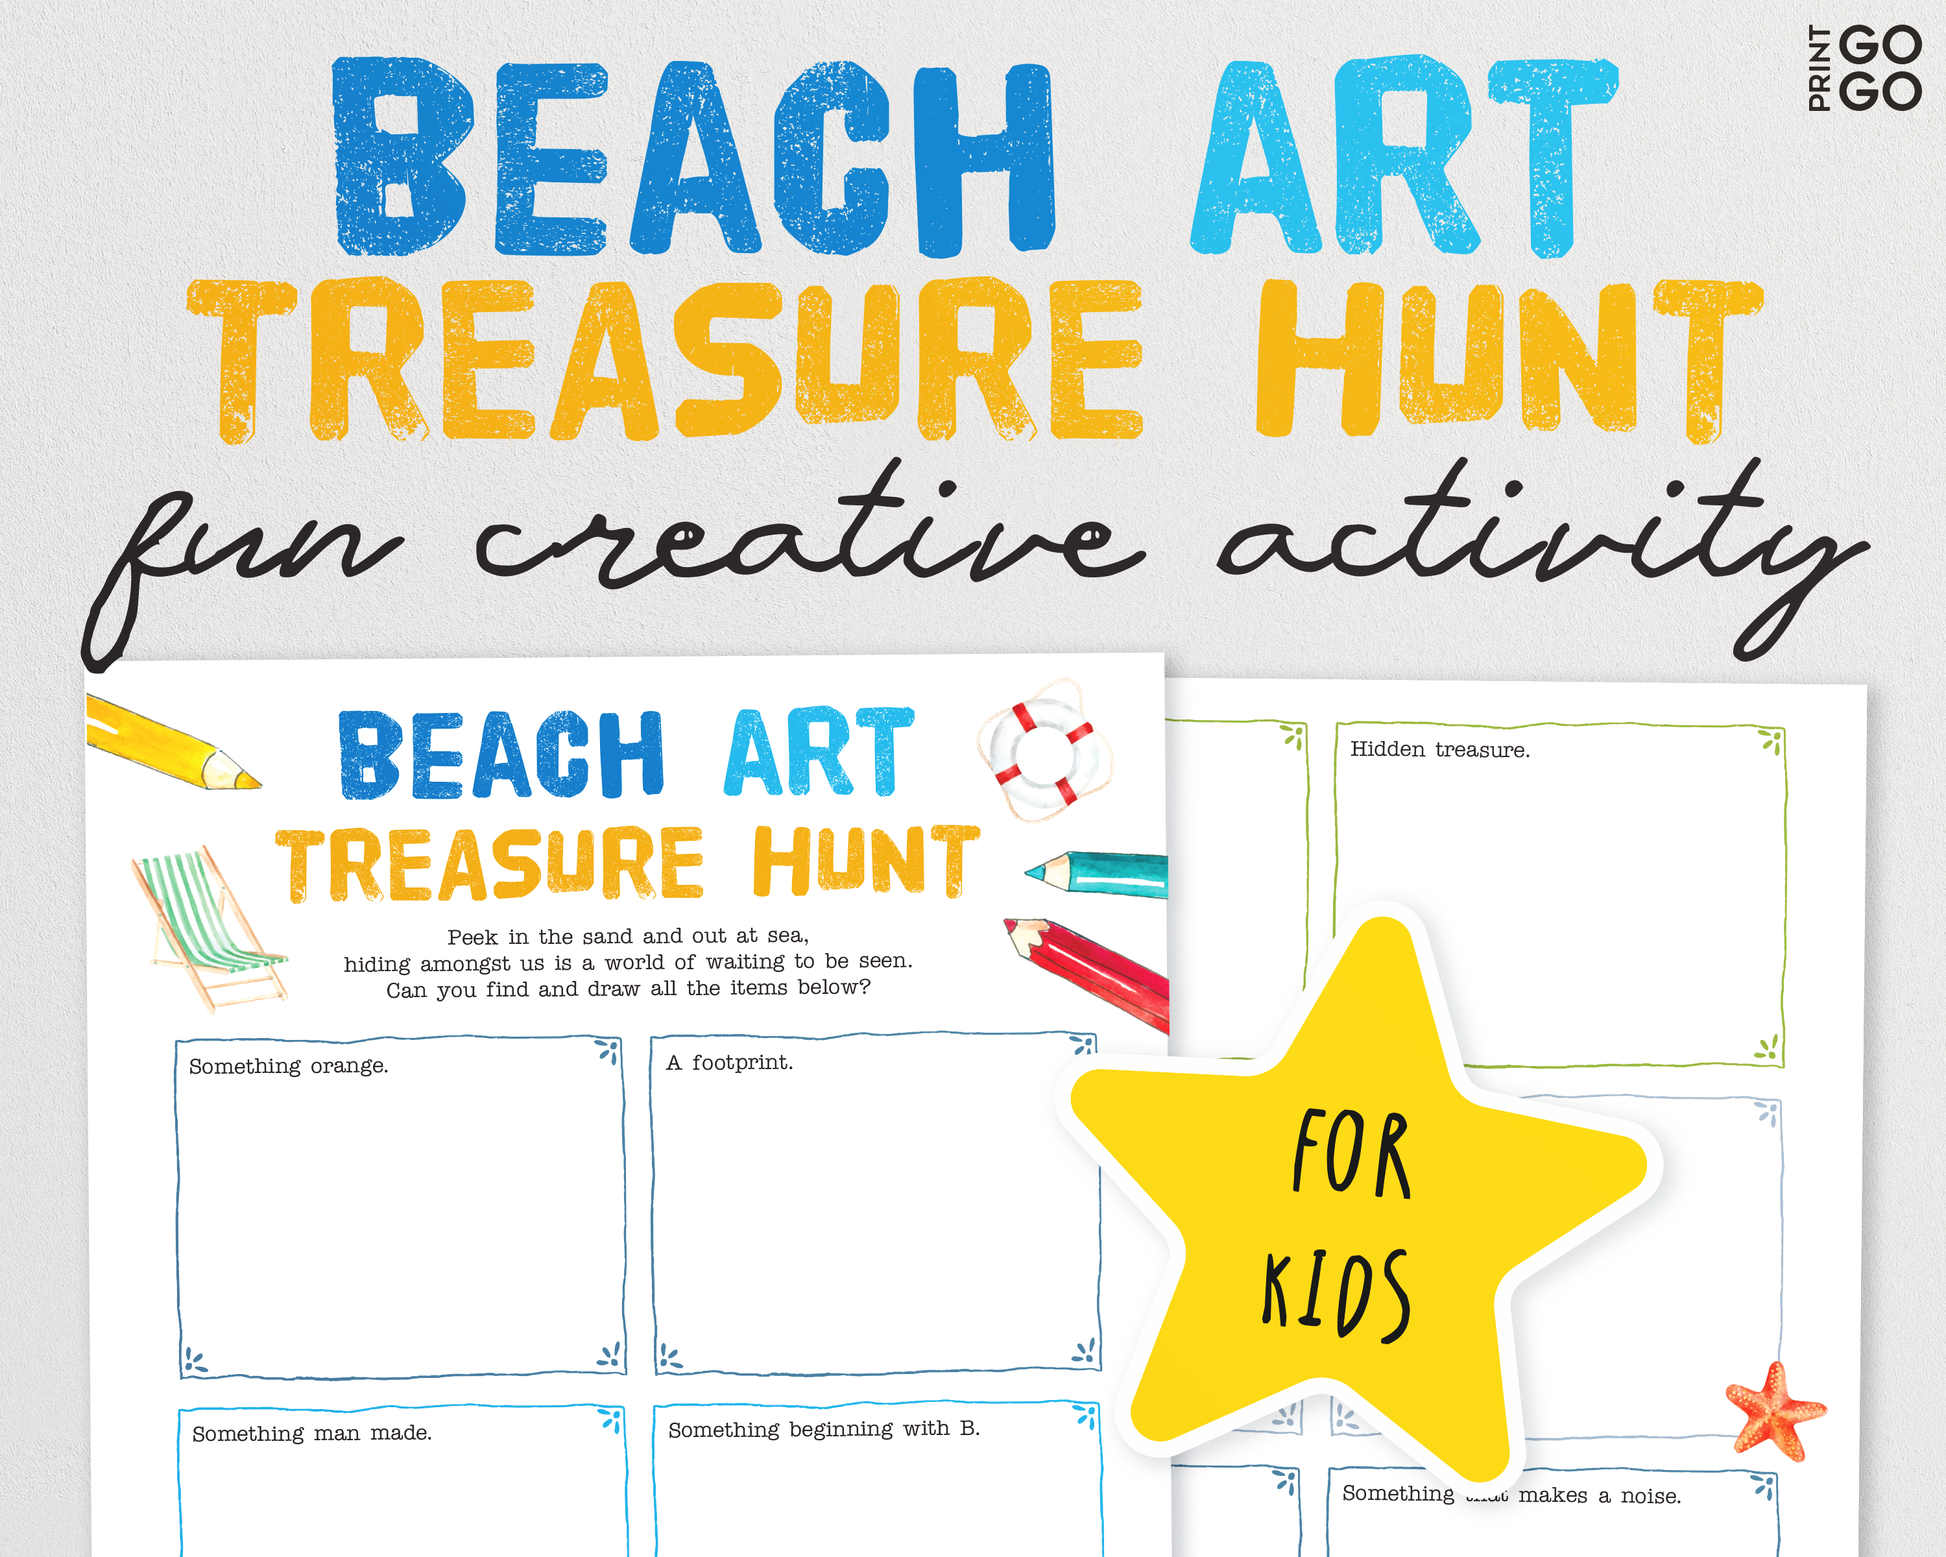 Beach Art Treasure Hunt for Kids | Outdoor Scavenger Hunt Game | Children's Art Game | Summer Holiday Activities | Creative Drawing Ideas